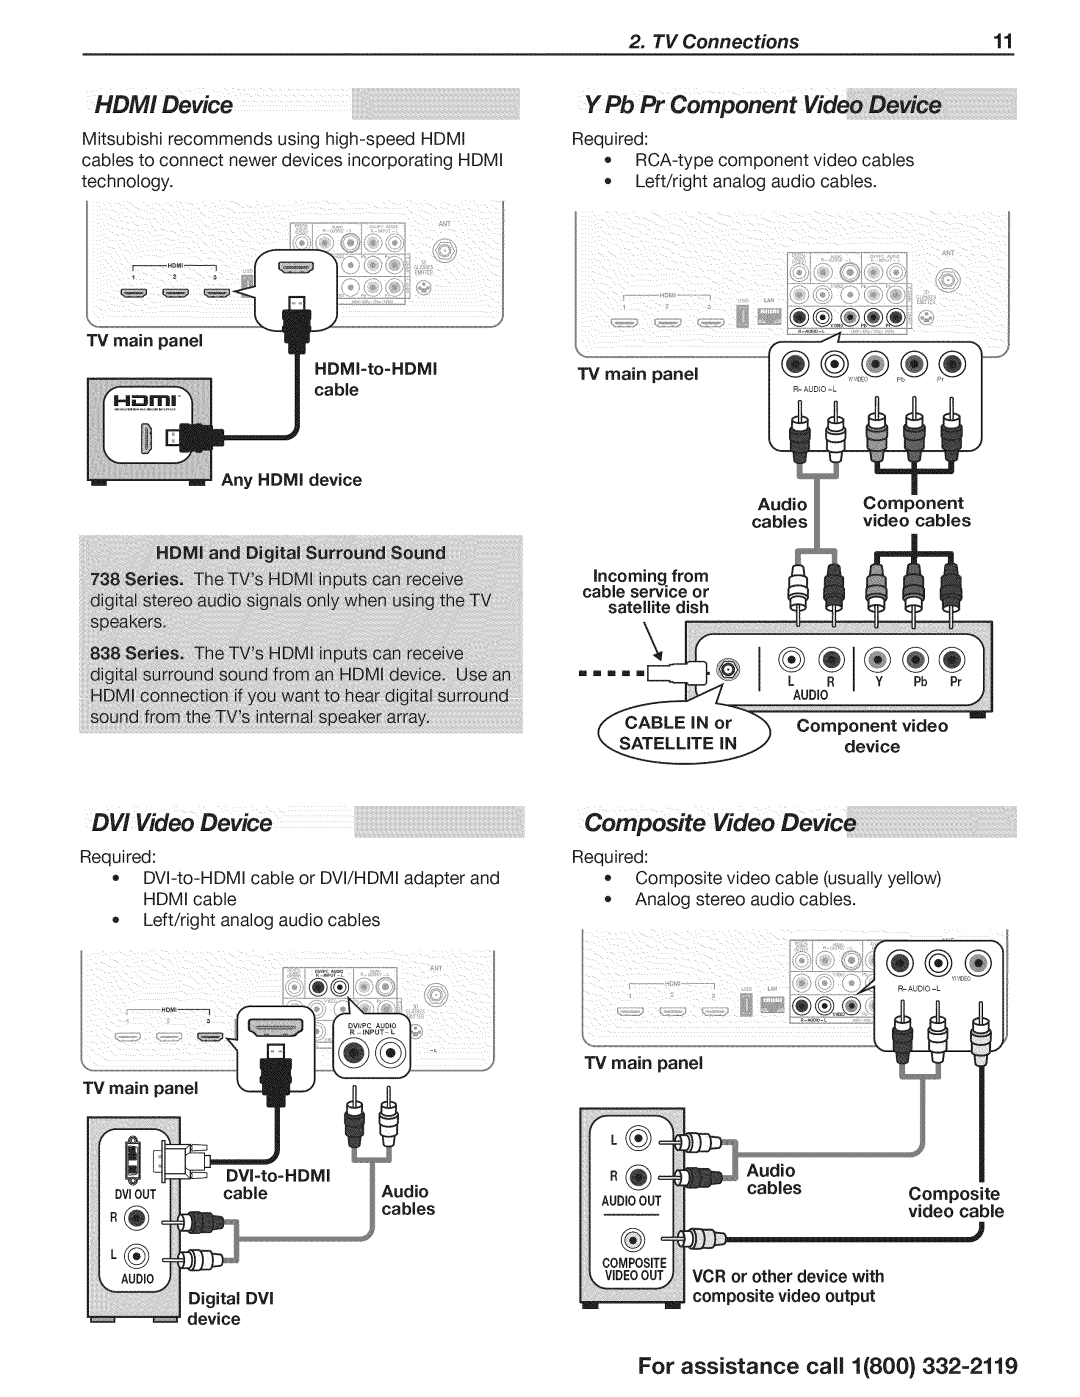 Mitsubishi Electronics 838, 738 manual Y Pb Pr Compon en t Vide_, I L @1 @@, For assistance call 1800, TV Connections 